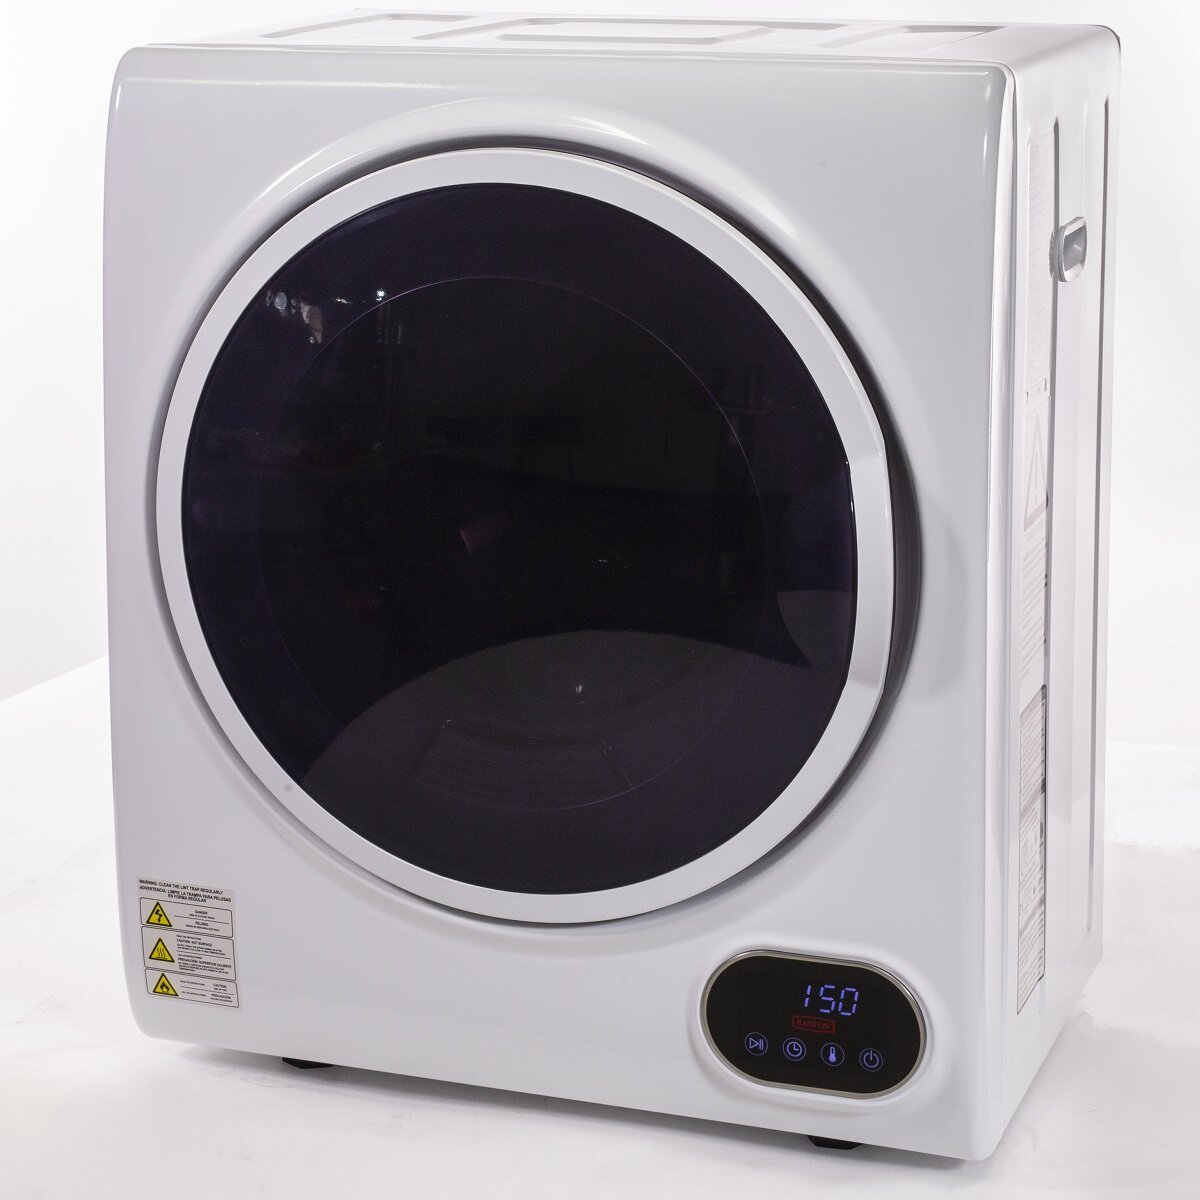 Barton Premium Digital Electric Laundry Automatic Dryer Machine Timer Control Panel Dry Clothes, White